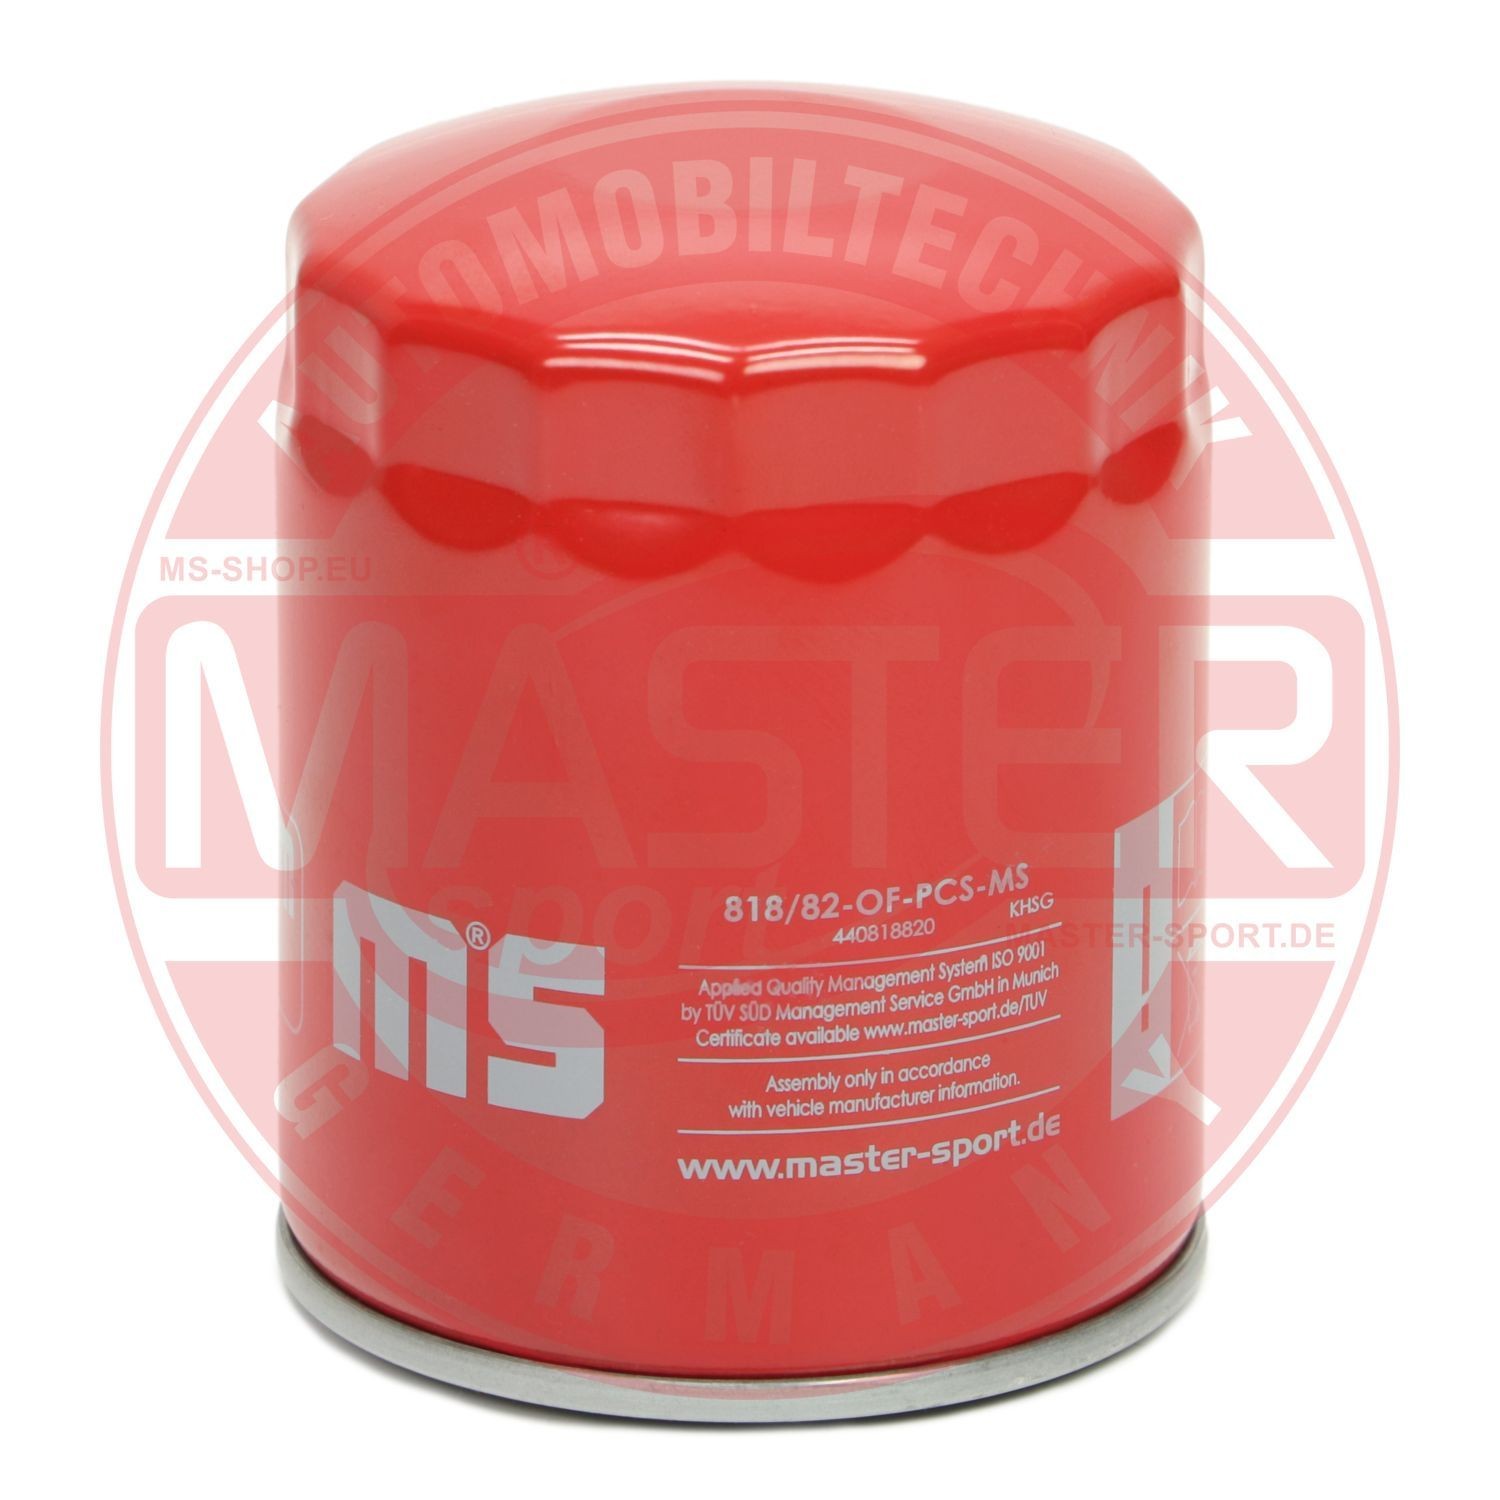 440818820 MASTER-SPORT 818/82-OF-PCS-MS Oil filter 1520-81-3210